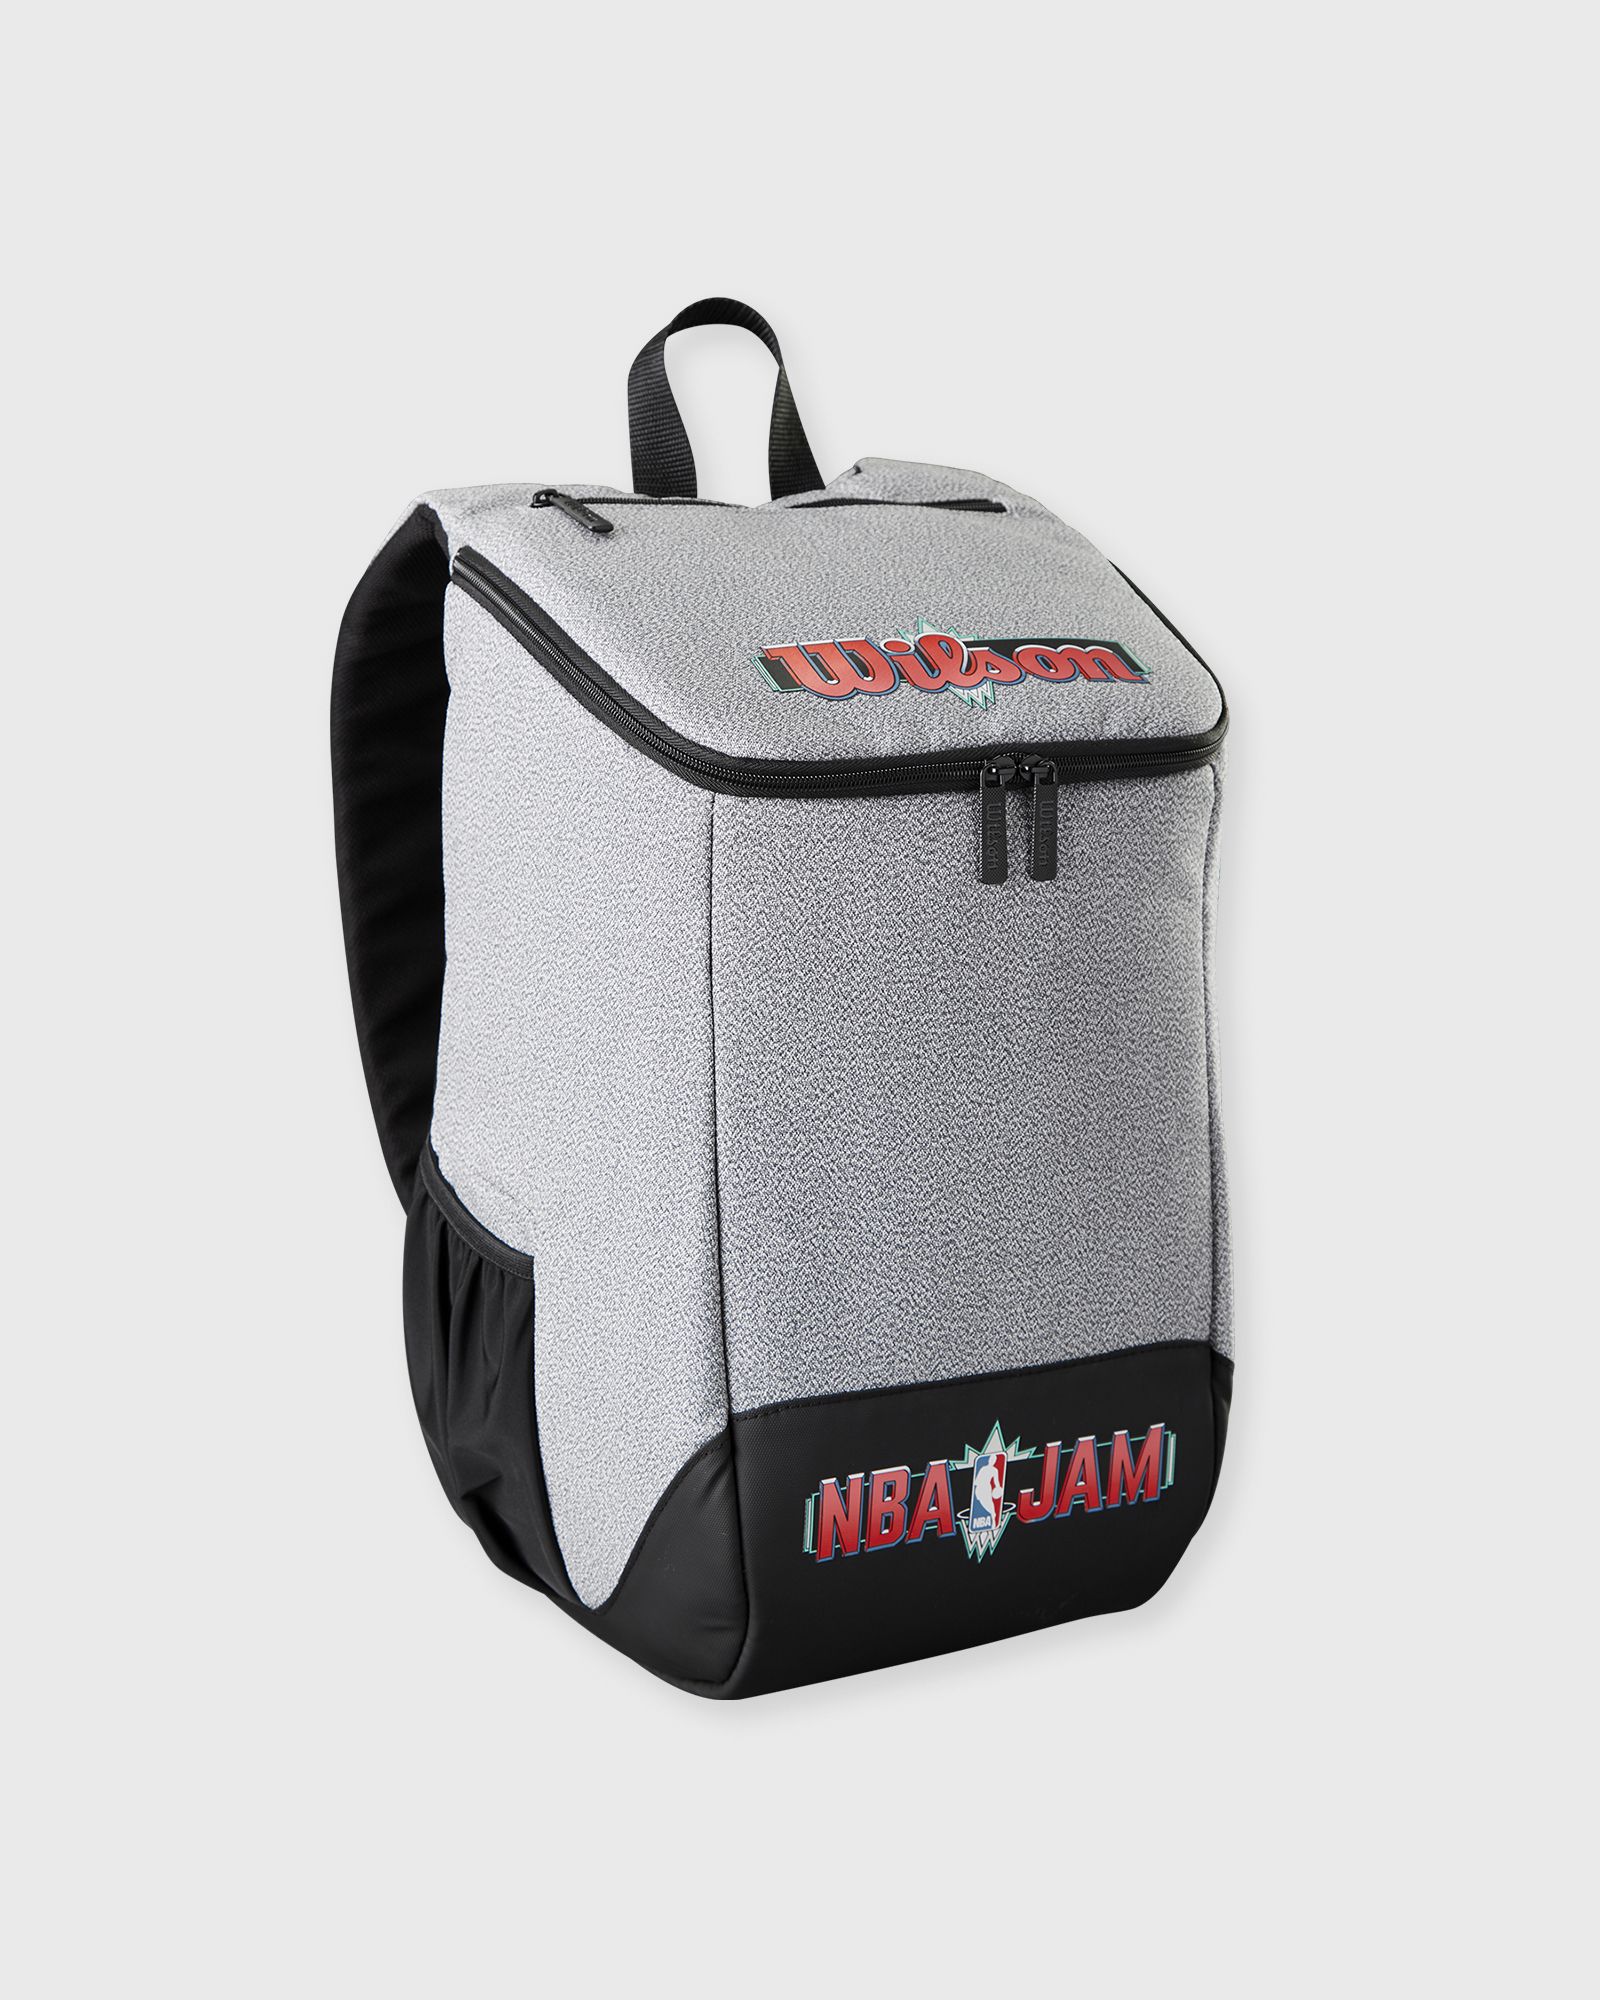 WILSON - nba jam authentic backpack  bags & backpacks|backpacks grey in größe:one size